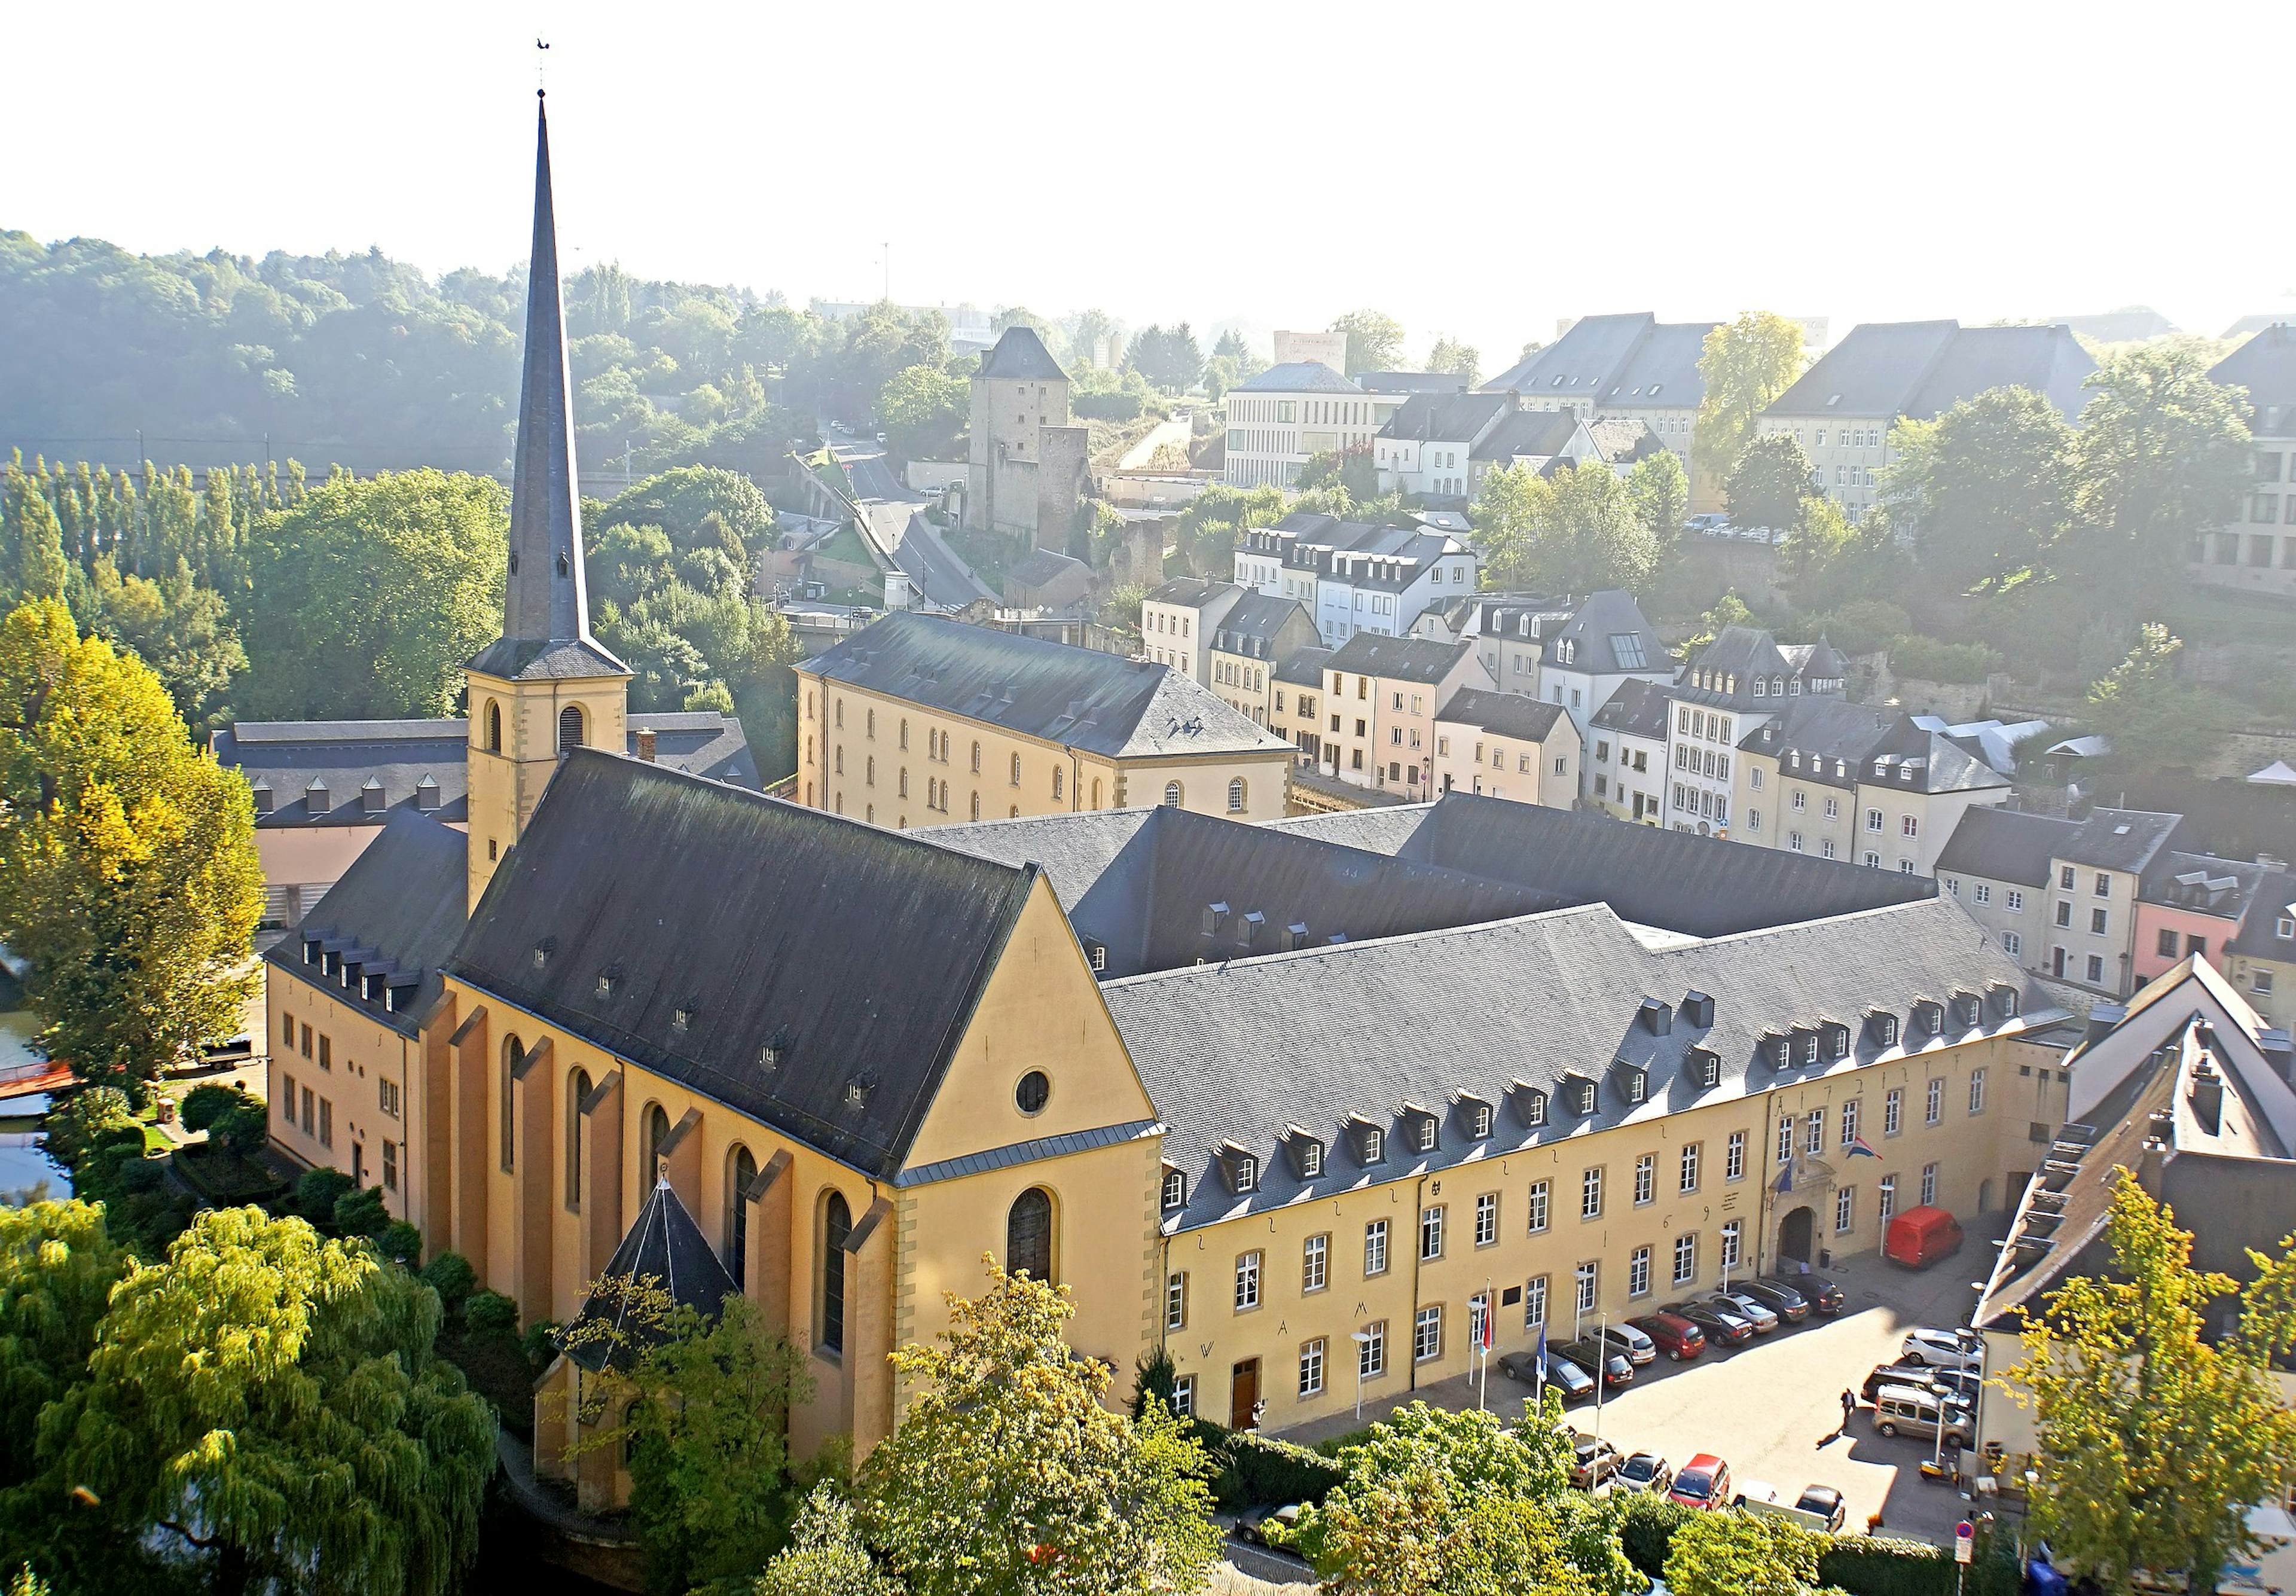 Neumünster Abbey